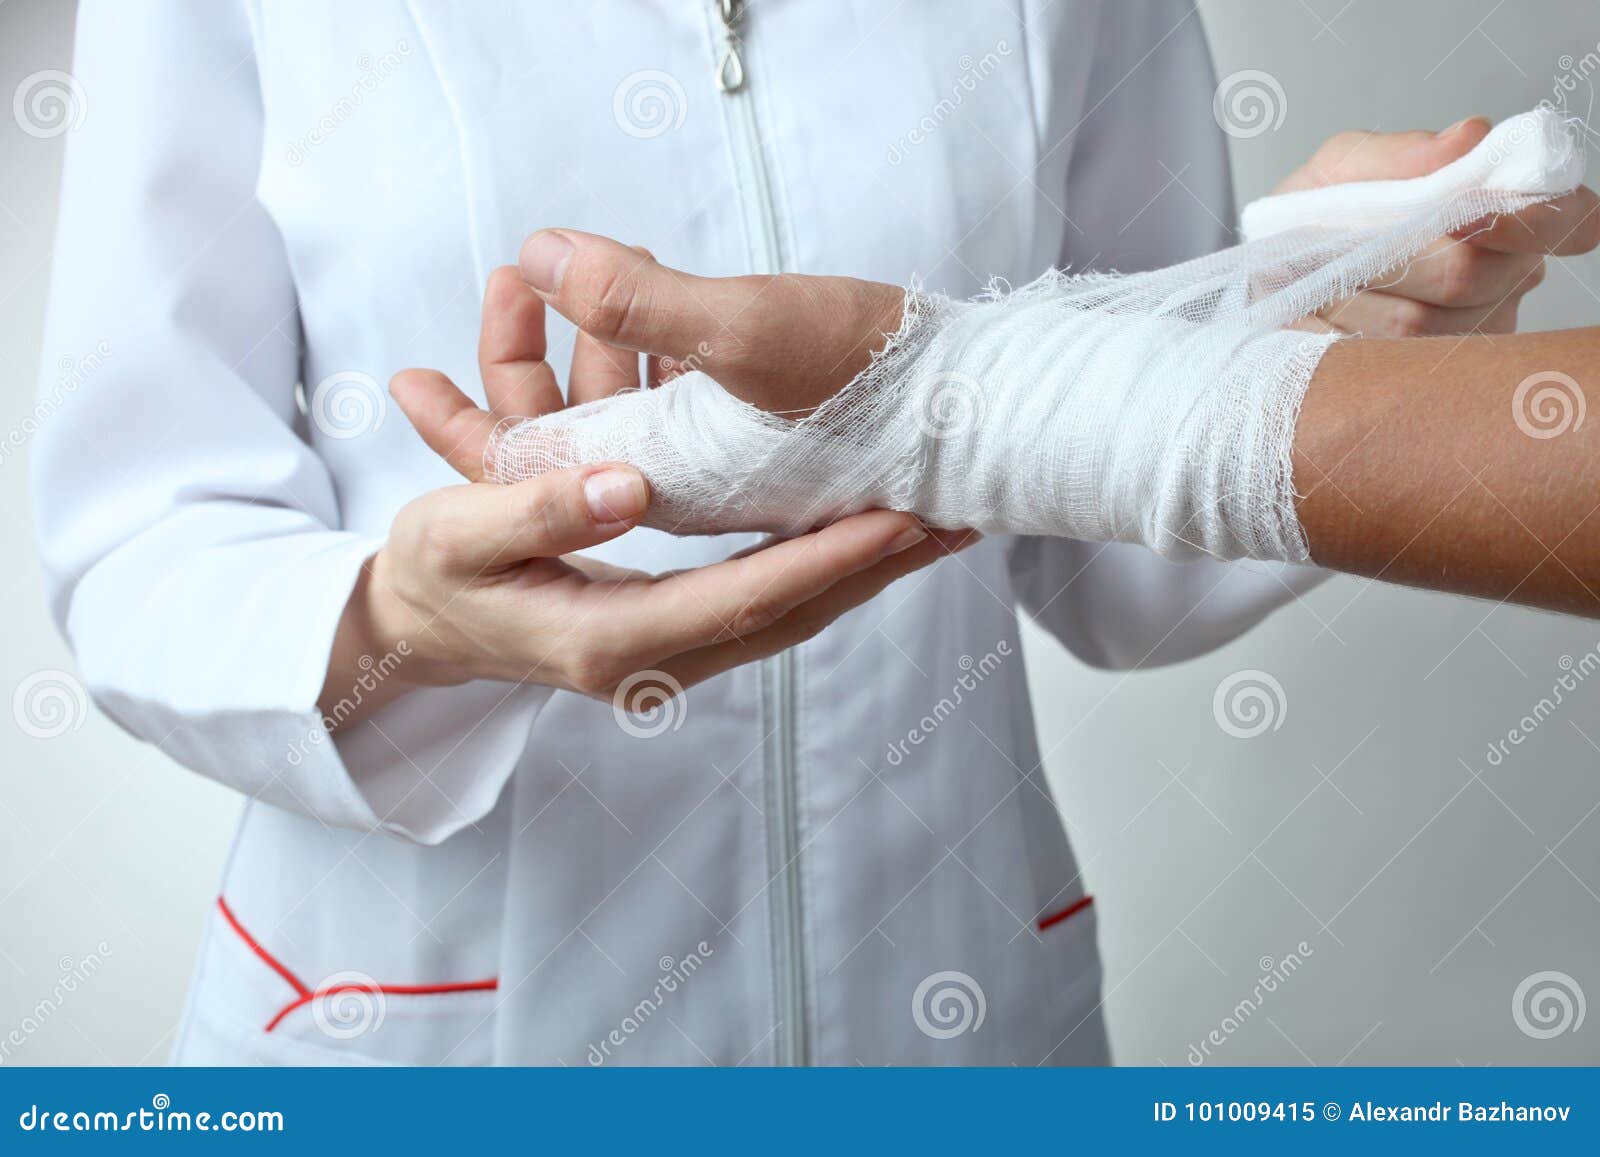 Медсестра пришла перевязать руку